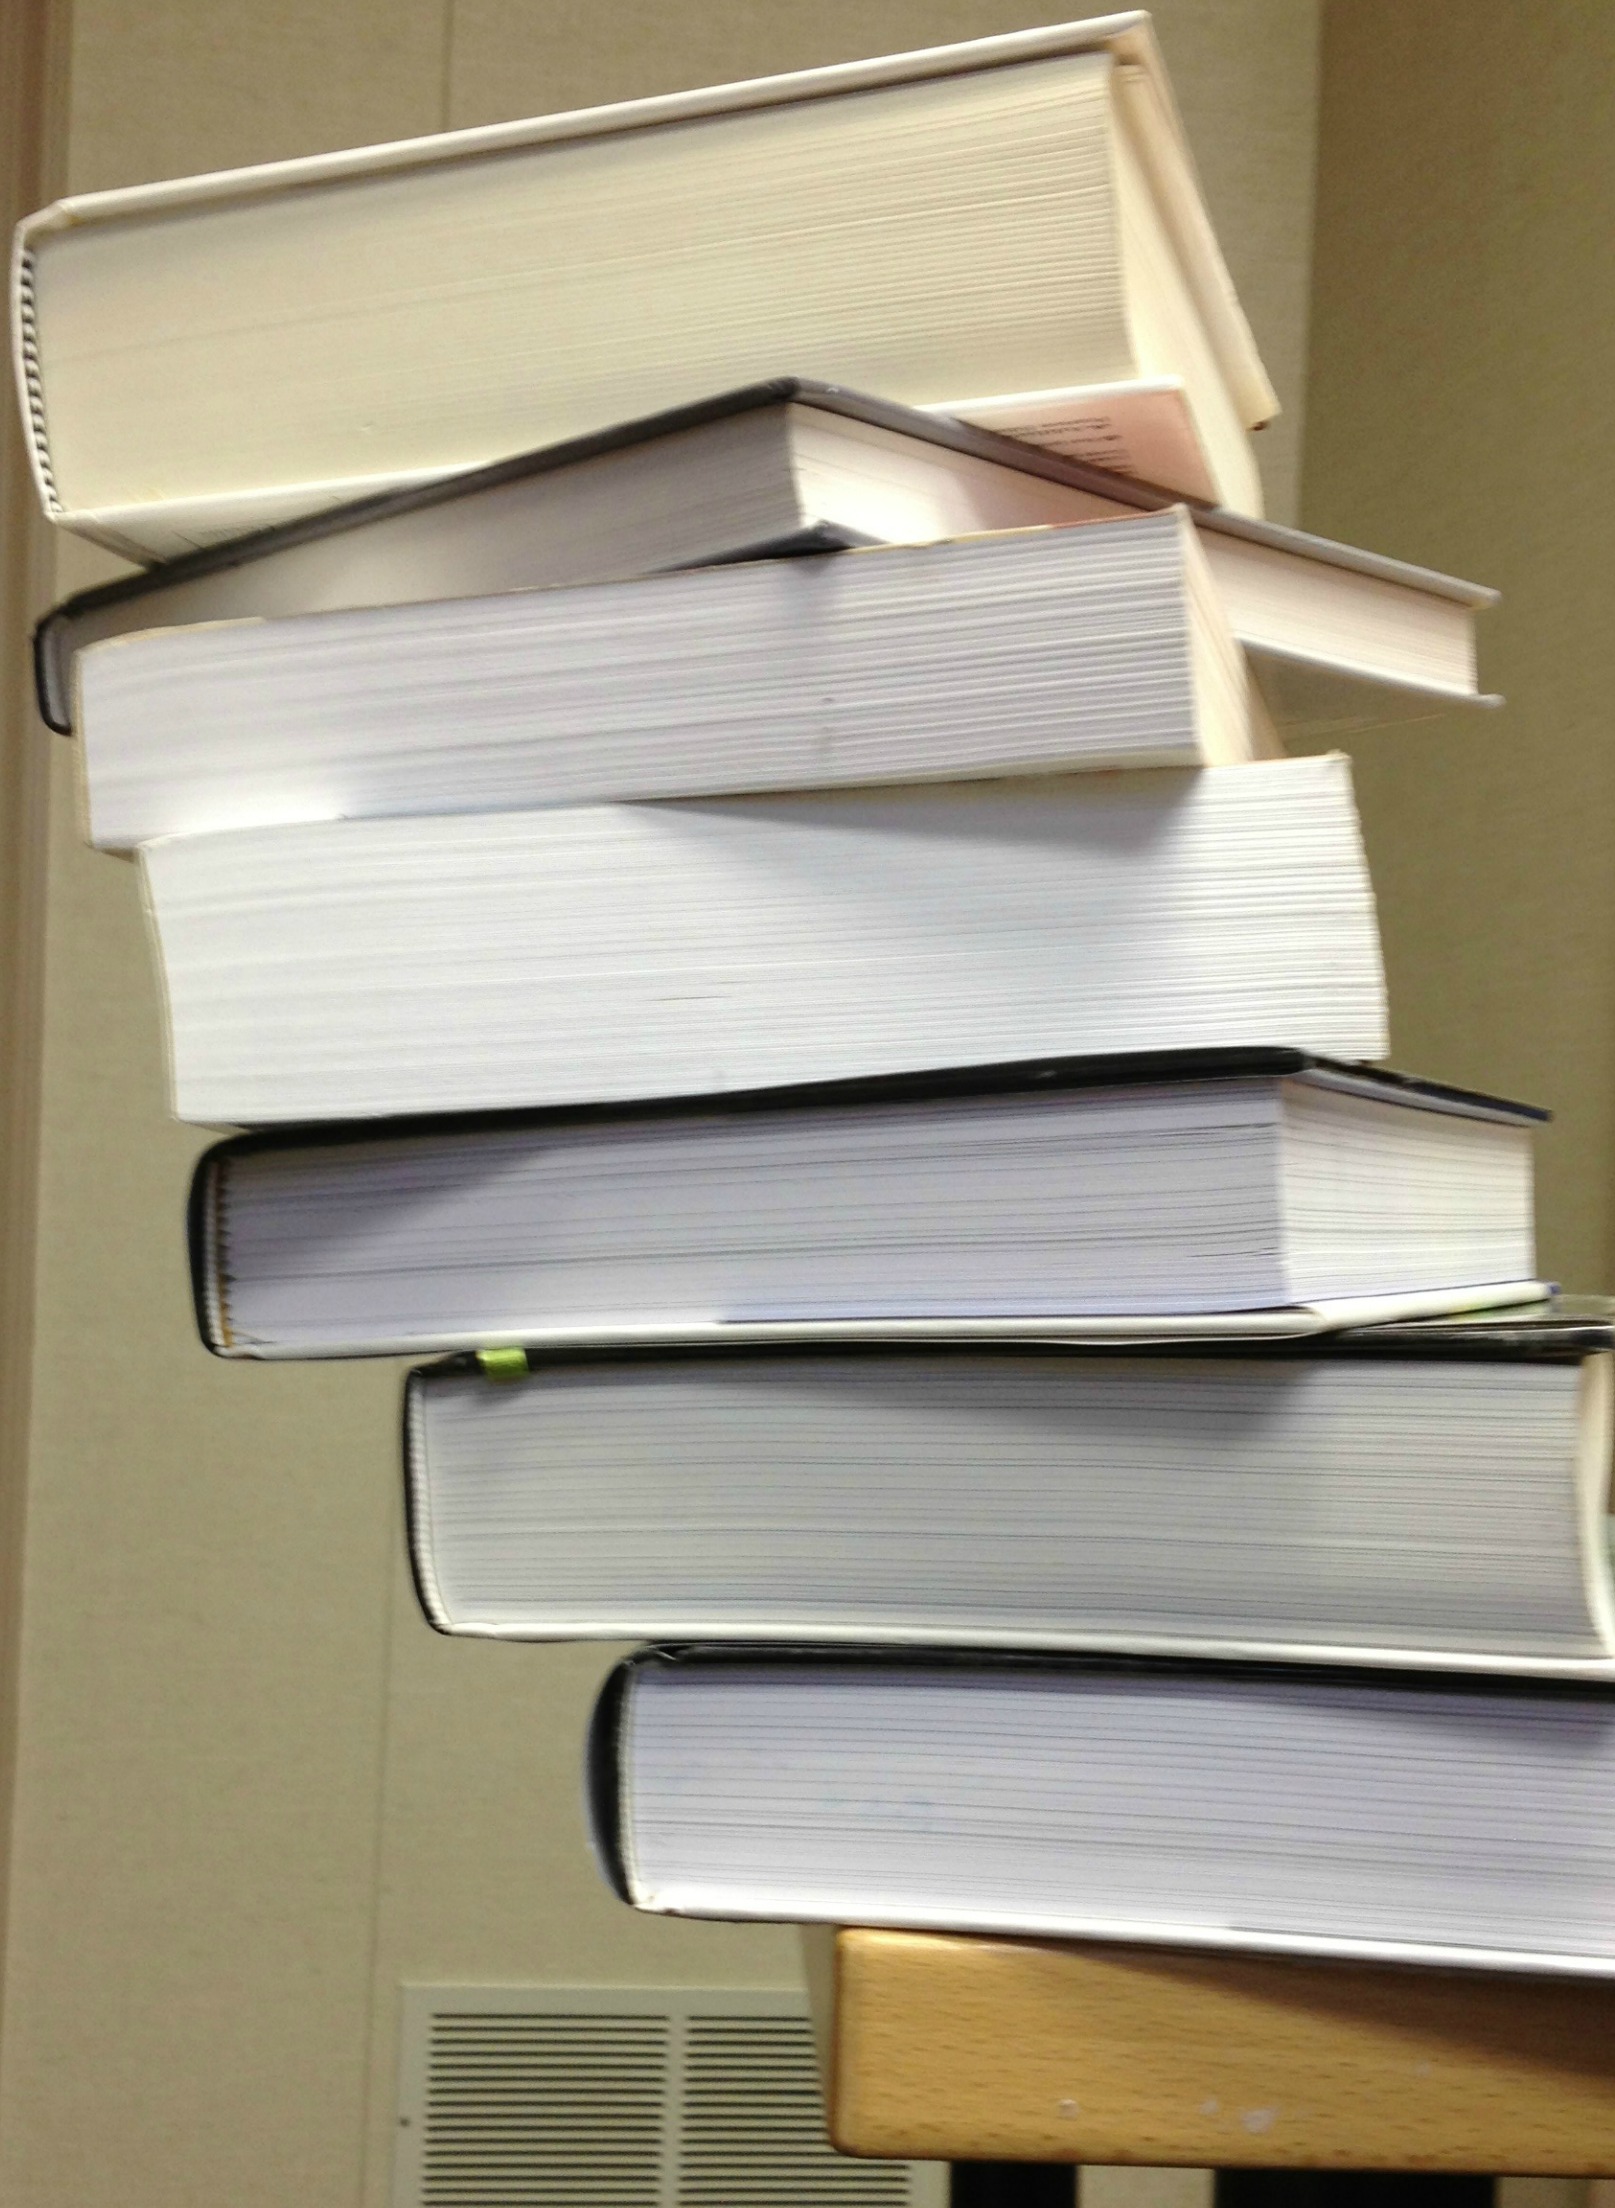 textbooks-2-rotated-photo-by-joe-mckendrick.jpg